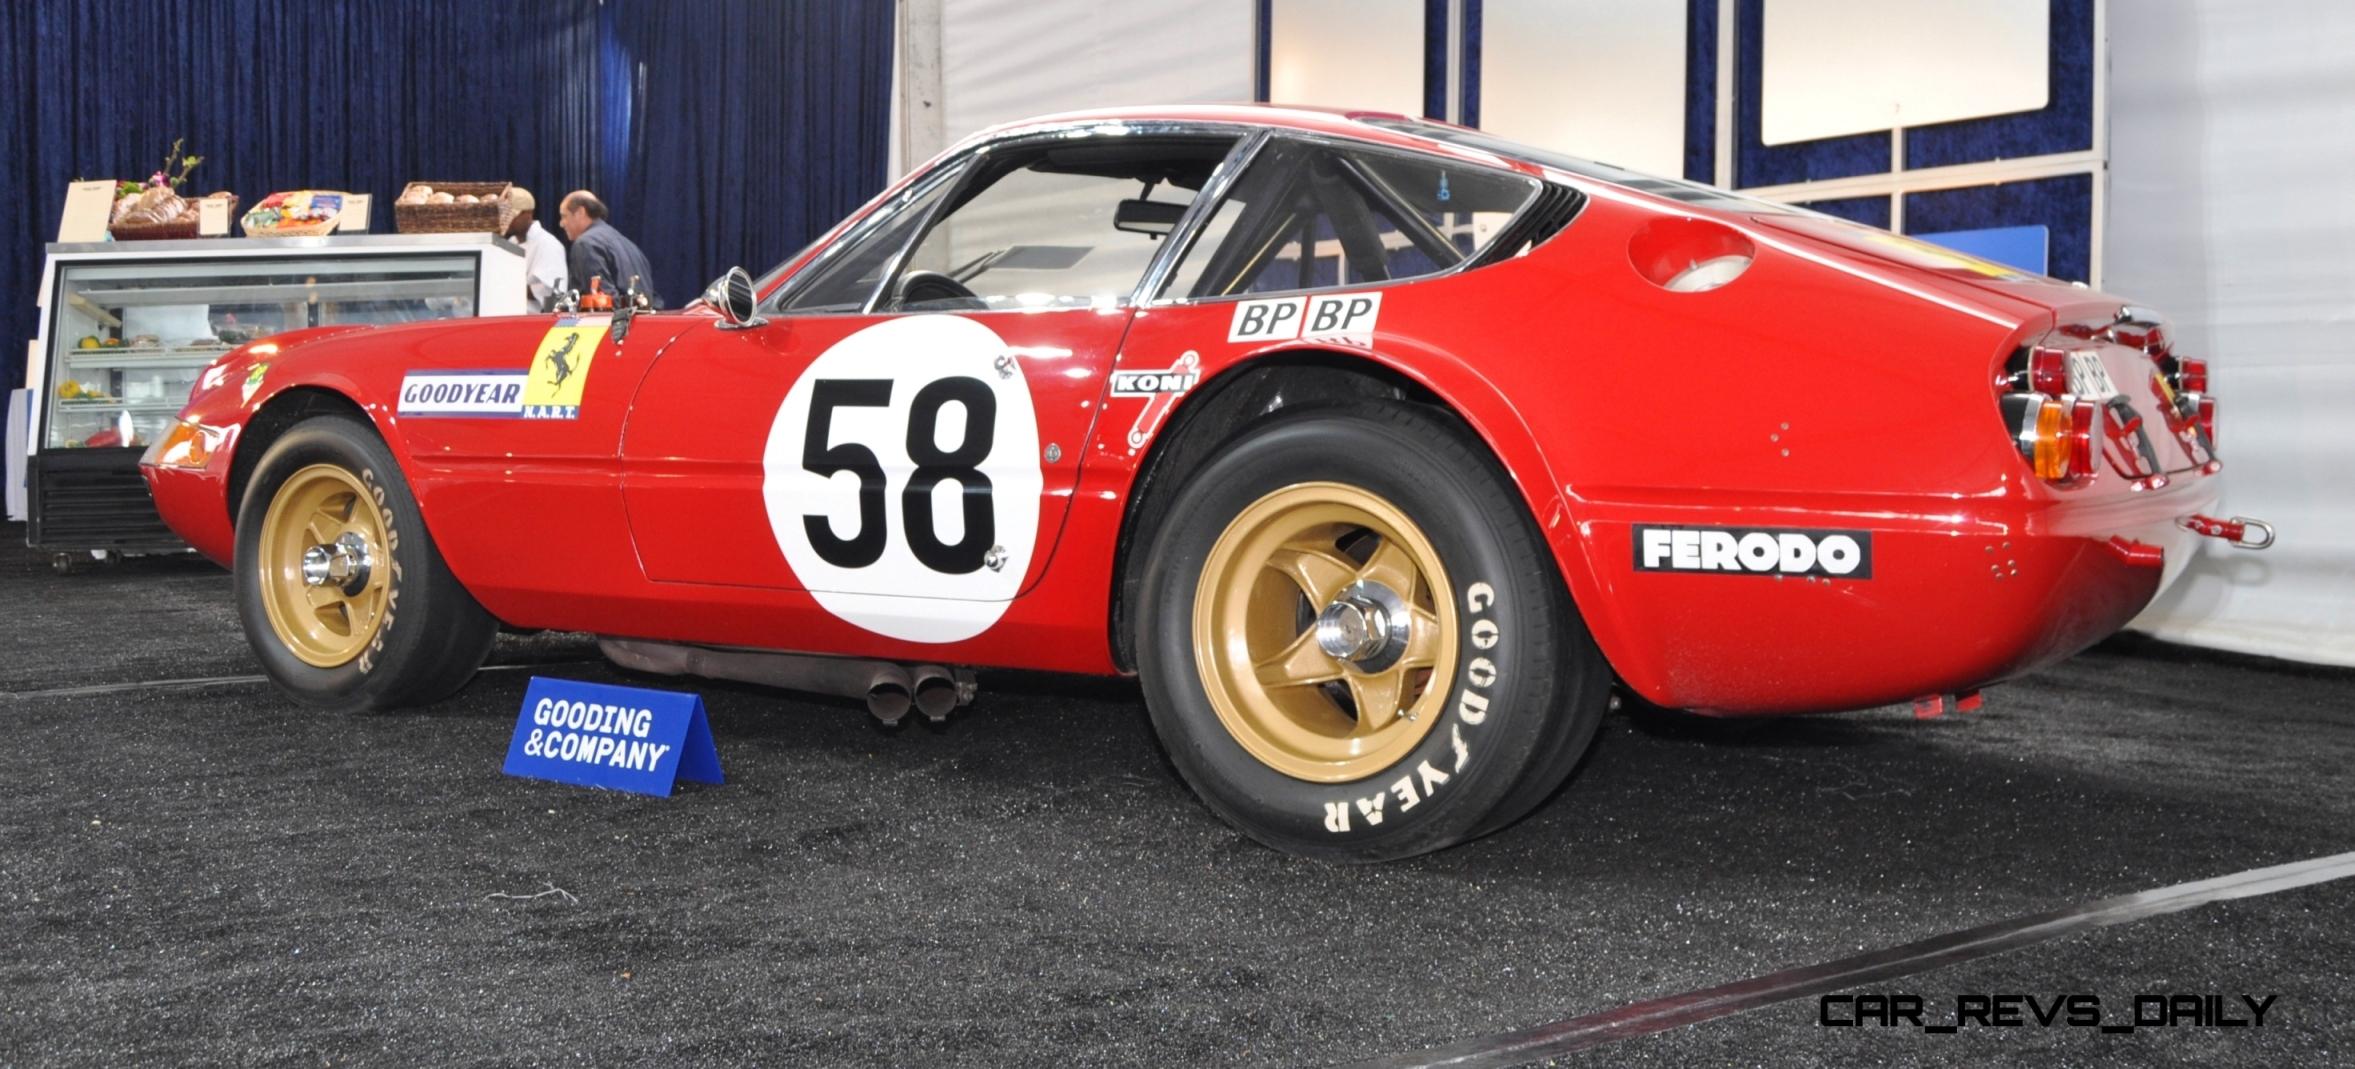 Car-Revs-Daily.com-1969-Ferrari-365-GTB4-Daytona-Competizione-10.jpg